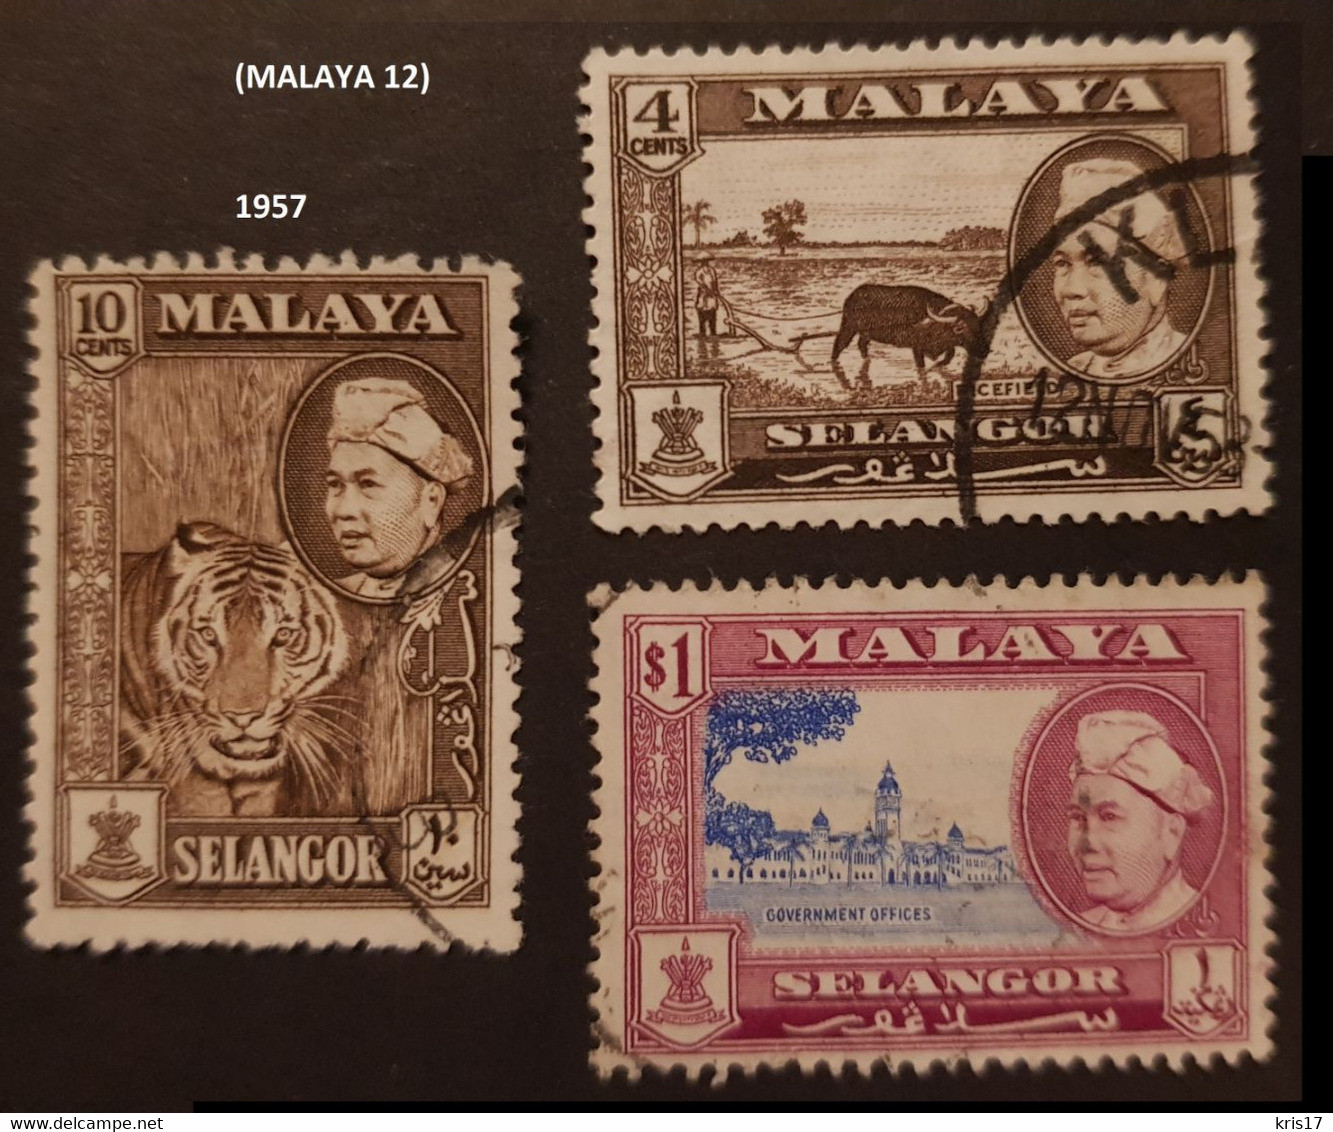 (ti) (MALAYA12) Malaisie, Malaya,SELANGOR 1957 - Malayan Postal Union